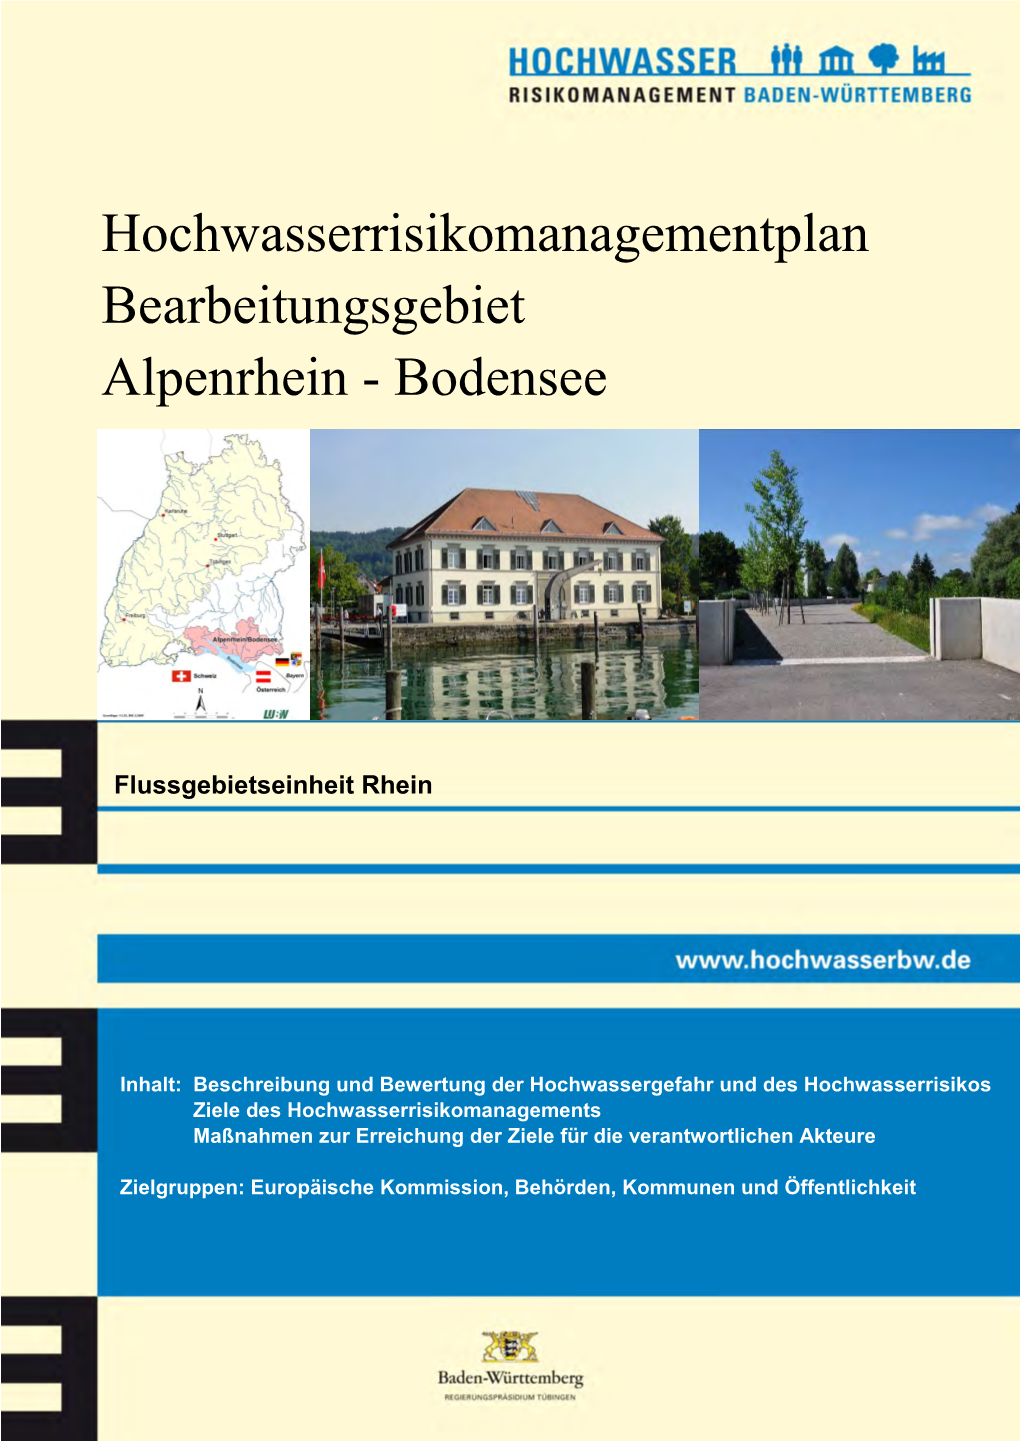 HWRMP Alpenrhein-Bodensee